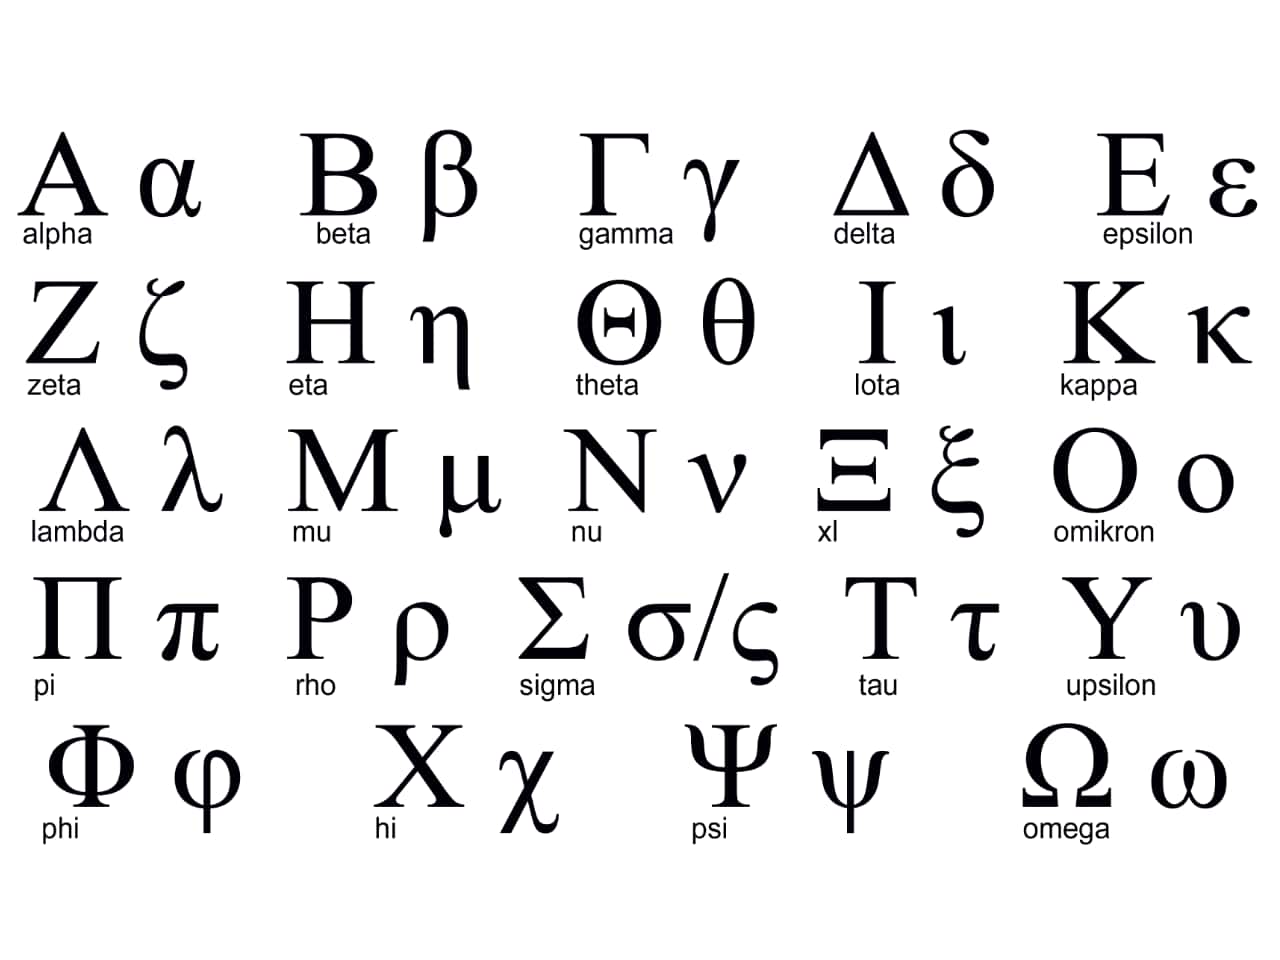 February 9th is International Greek Language Day